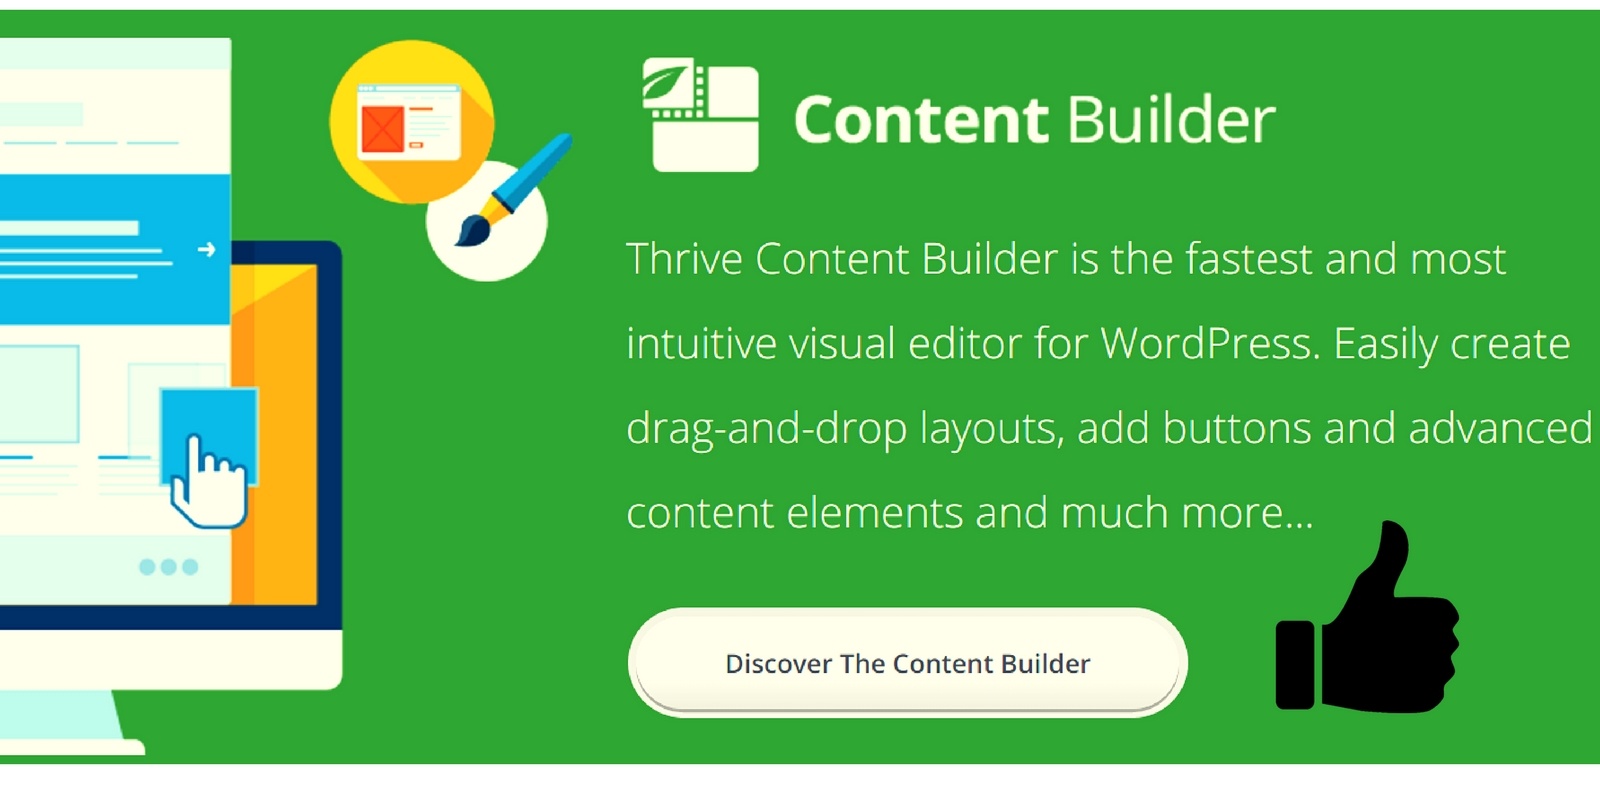 Thrive Content Builder